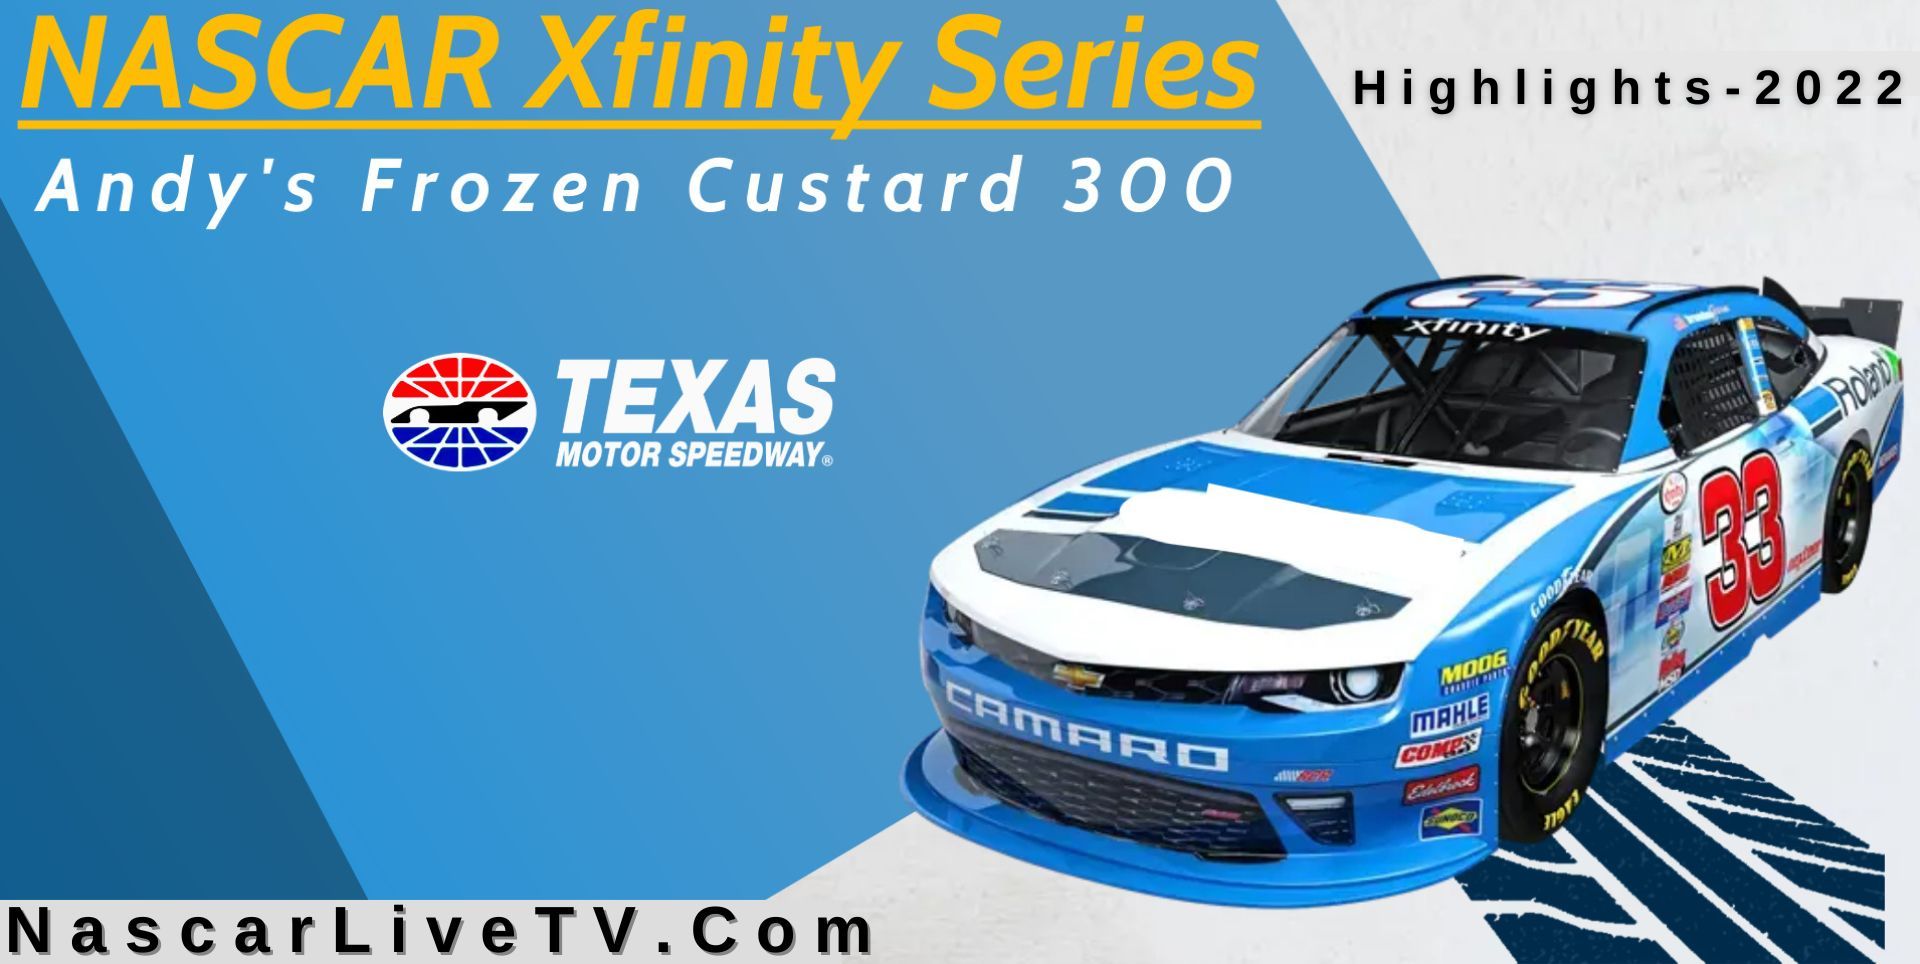 Andys Frozen Custard 300 Highlights NASCAR Xfinity 2022